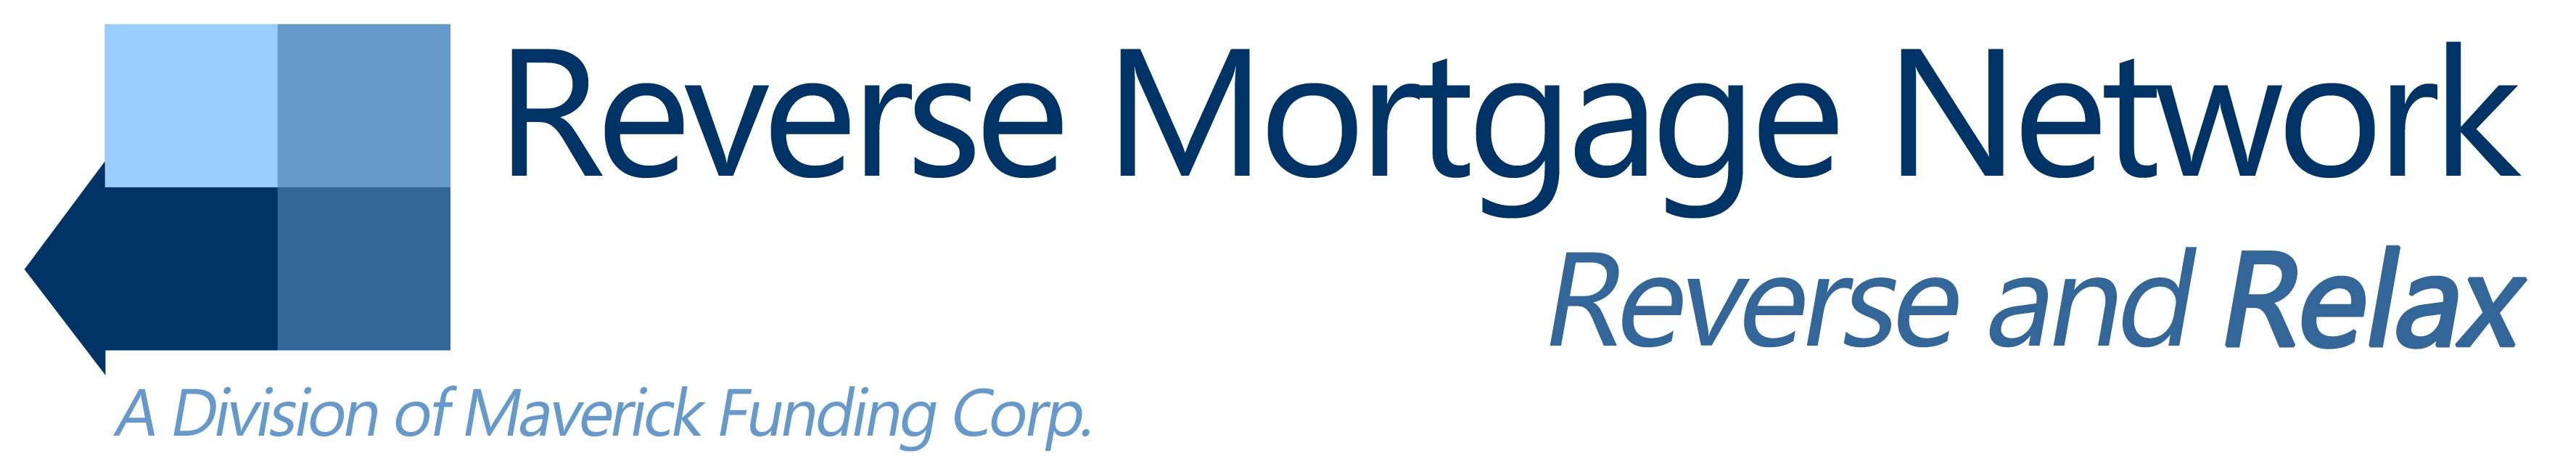 Reverse Mortgage Network